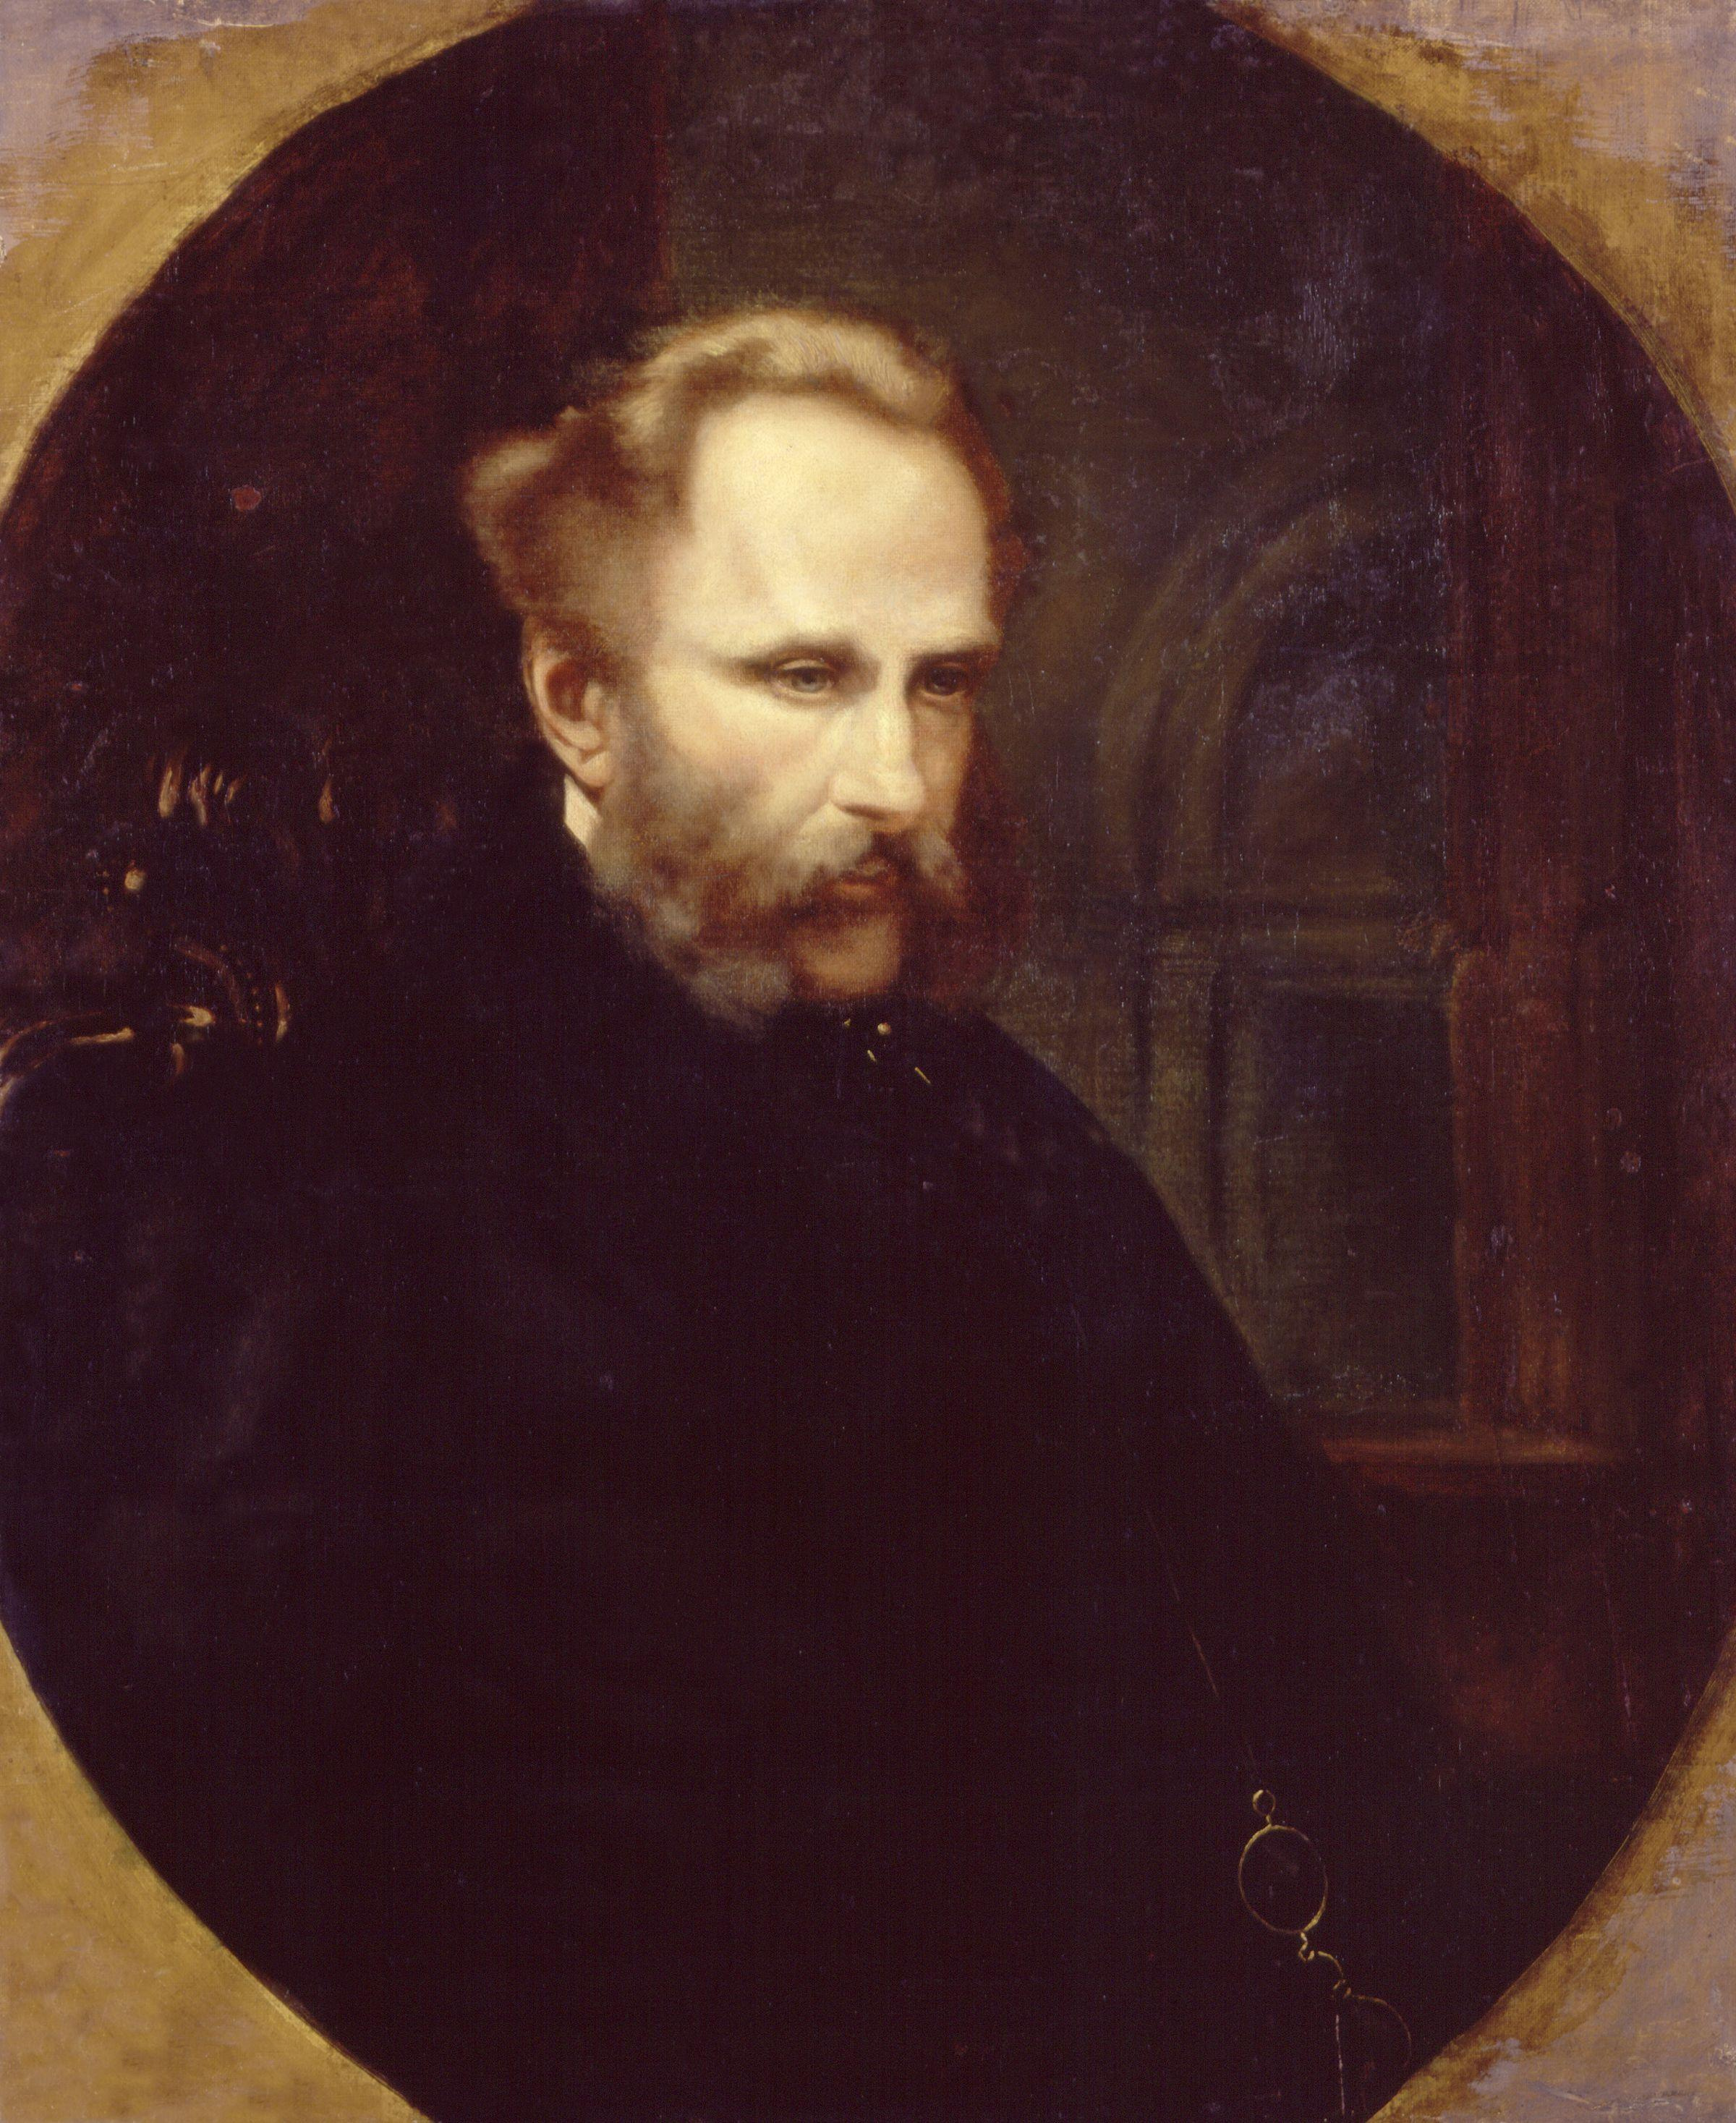 Image of Alexander William Kinglake from Wikidata